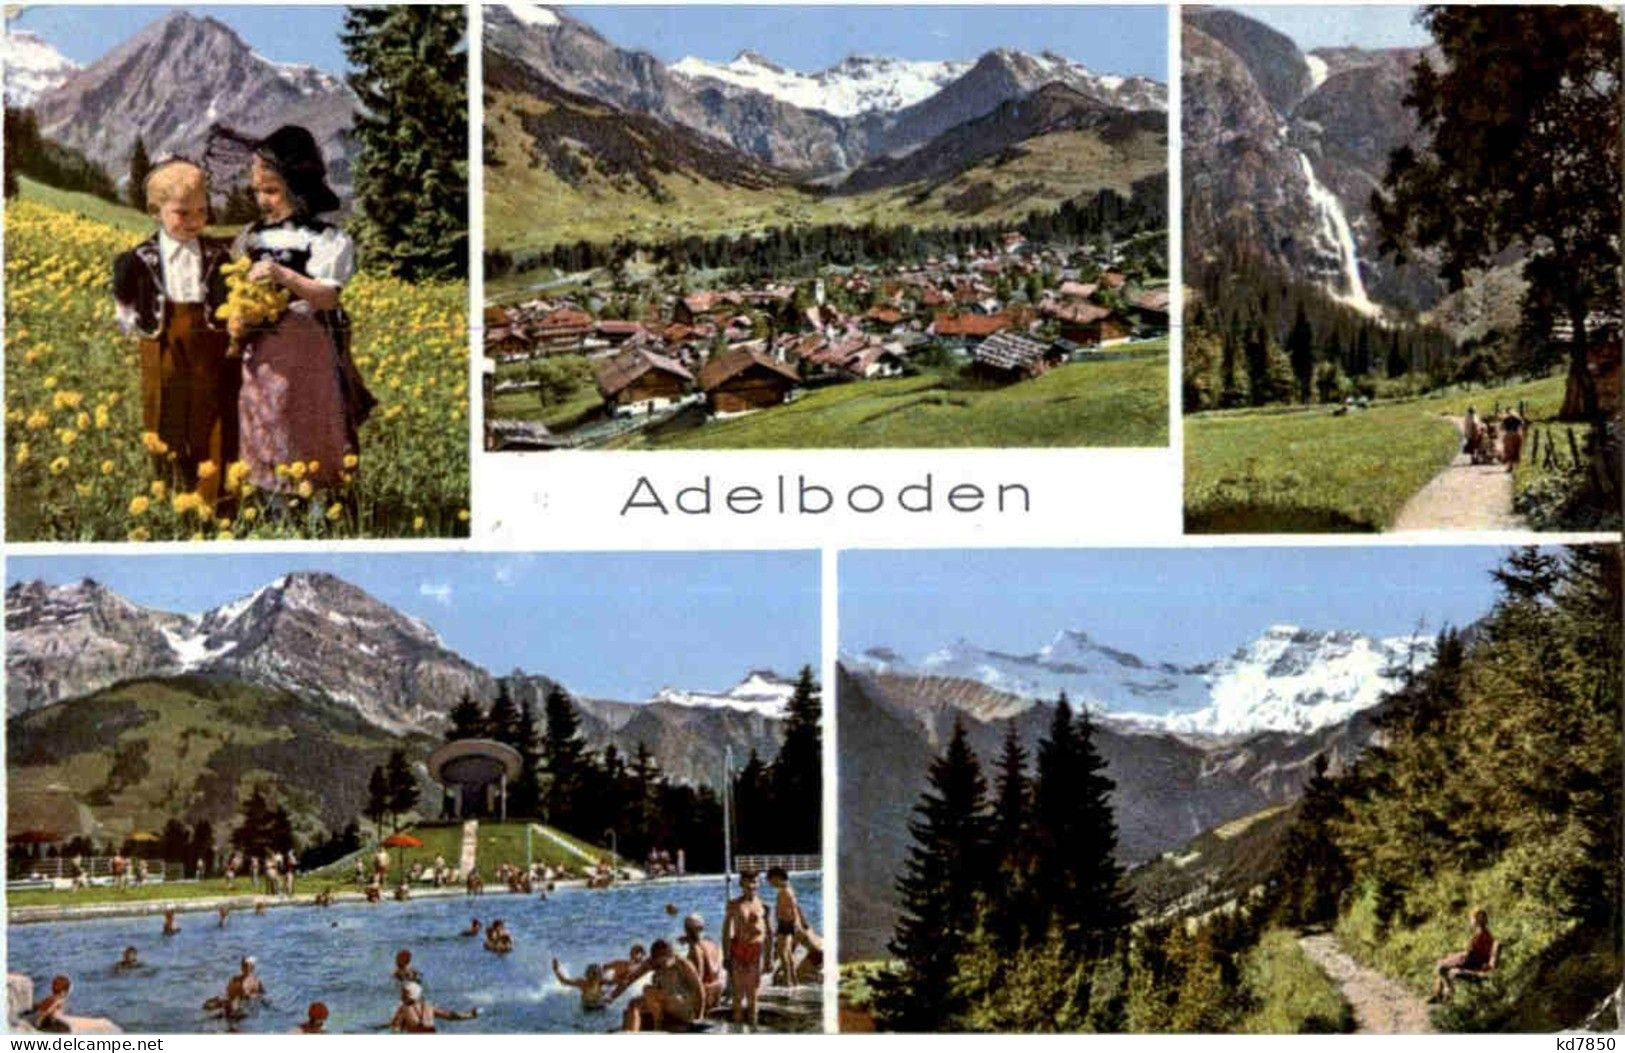 Adelboden - Adelboden